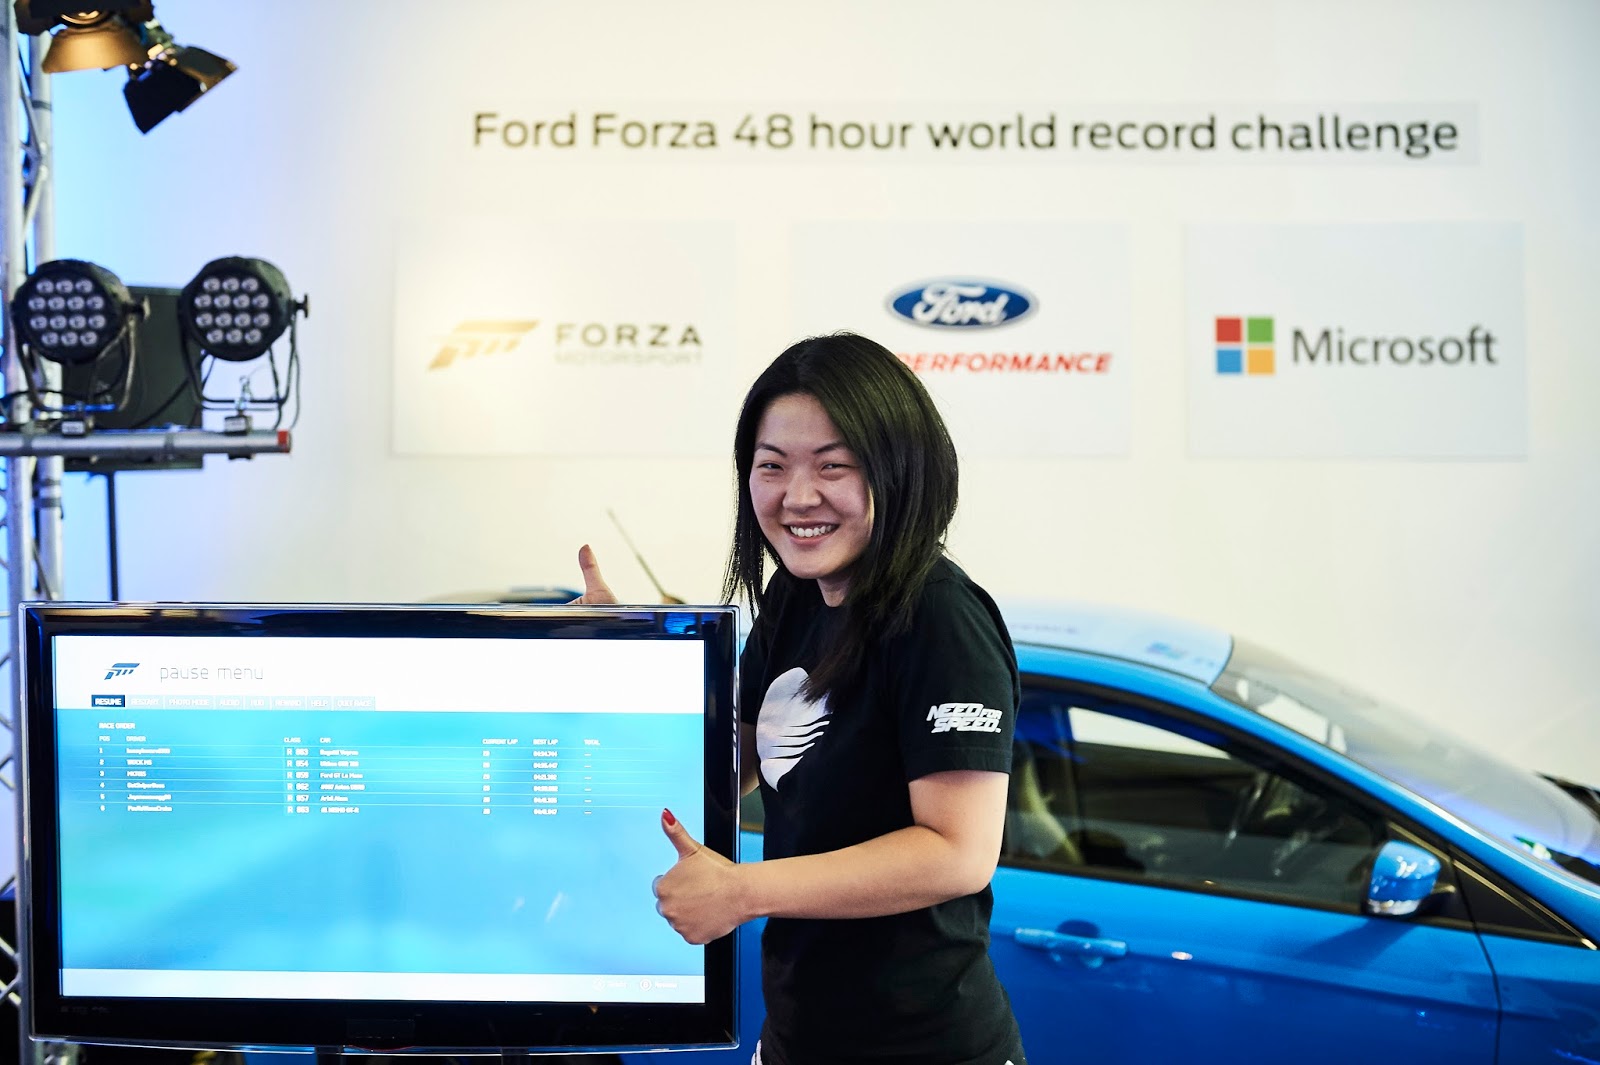 FordGamescom2016 82 Gamer έκανε νέο ρεκόρ Guinness, οδηγώντας συνολικά για 48 ώρες και 29 λεπτά στο Forza Motorsport 6!